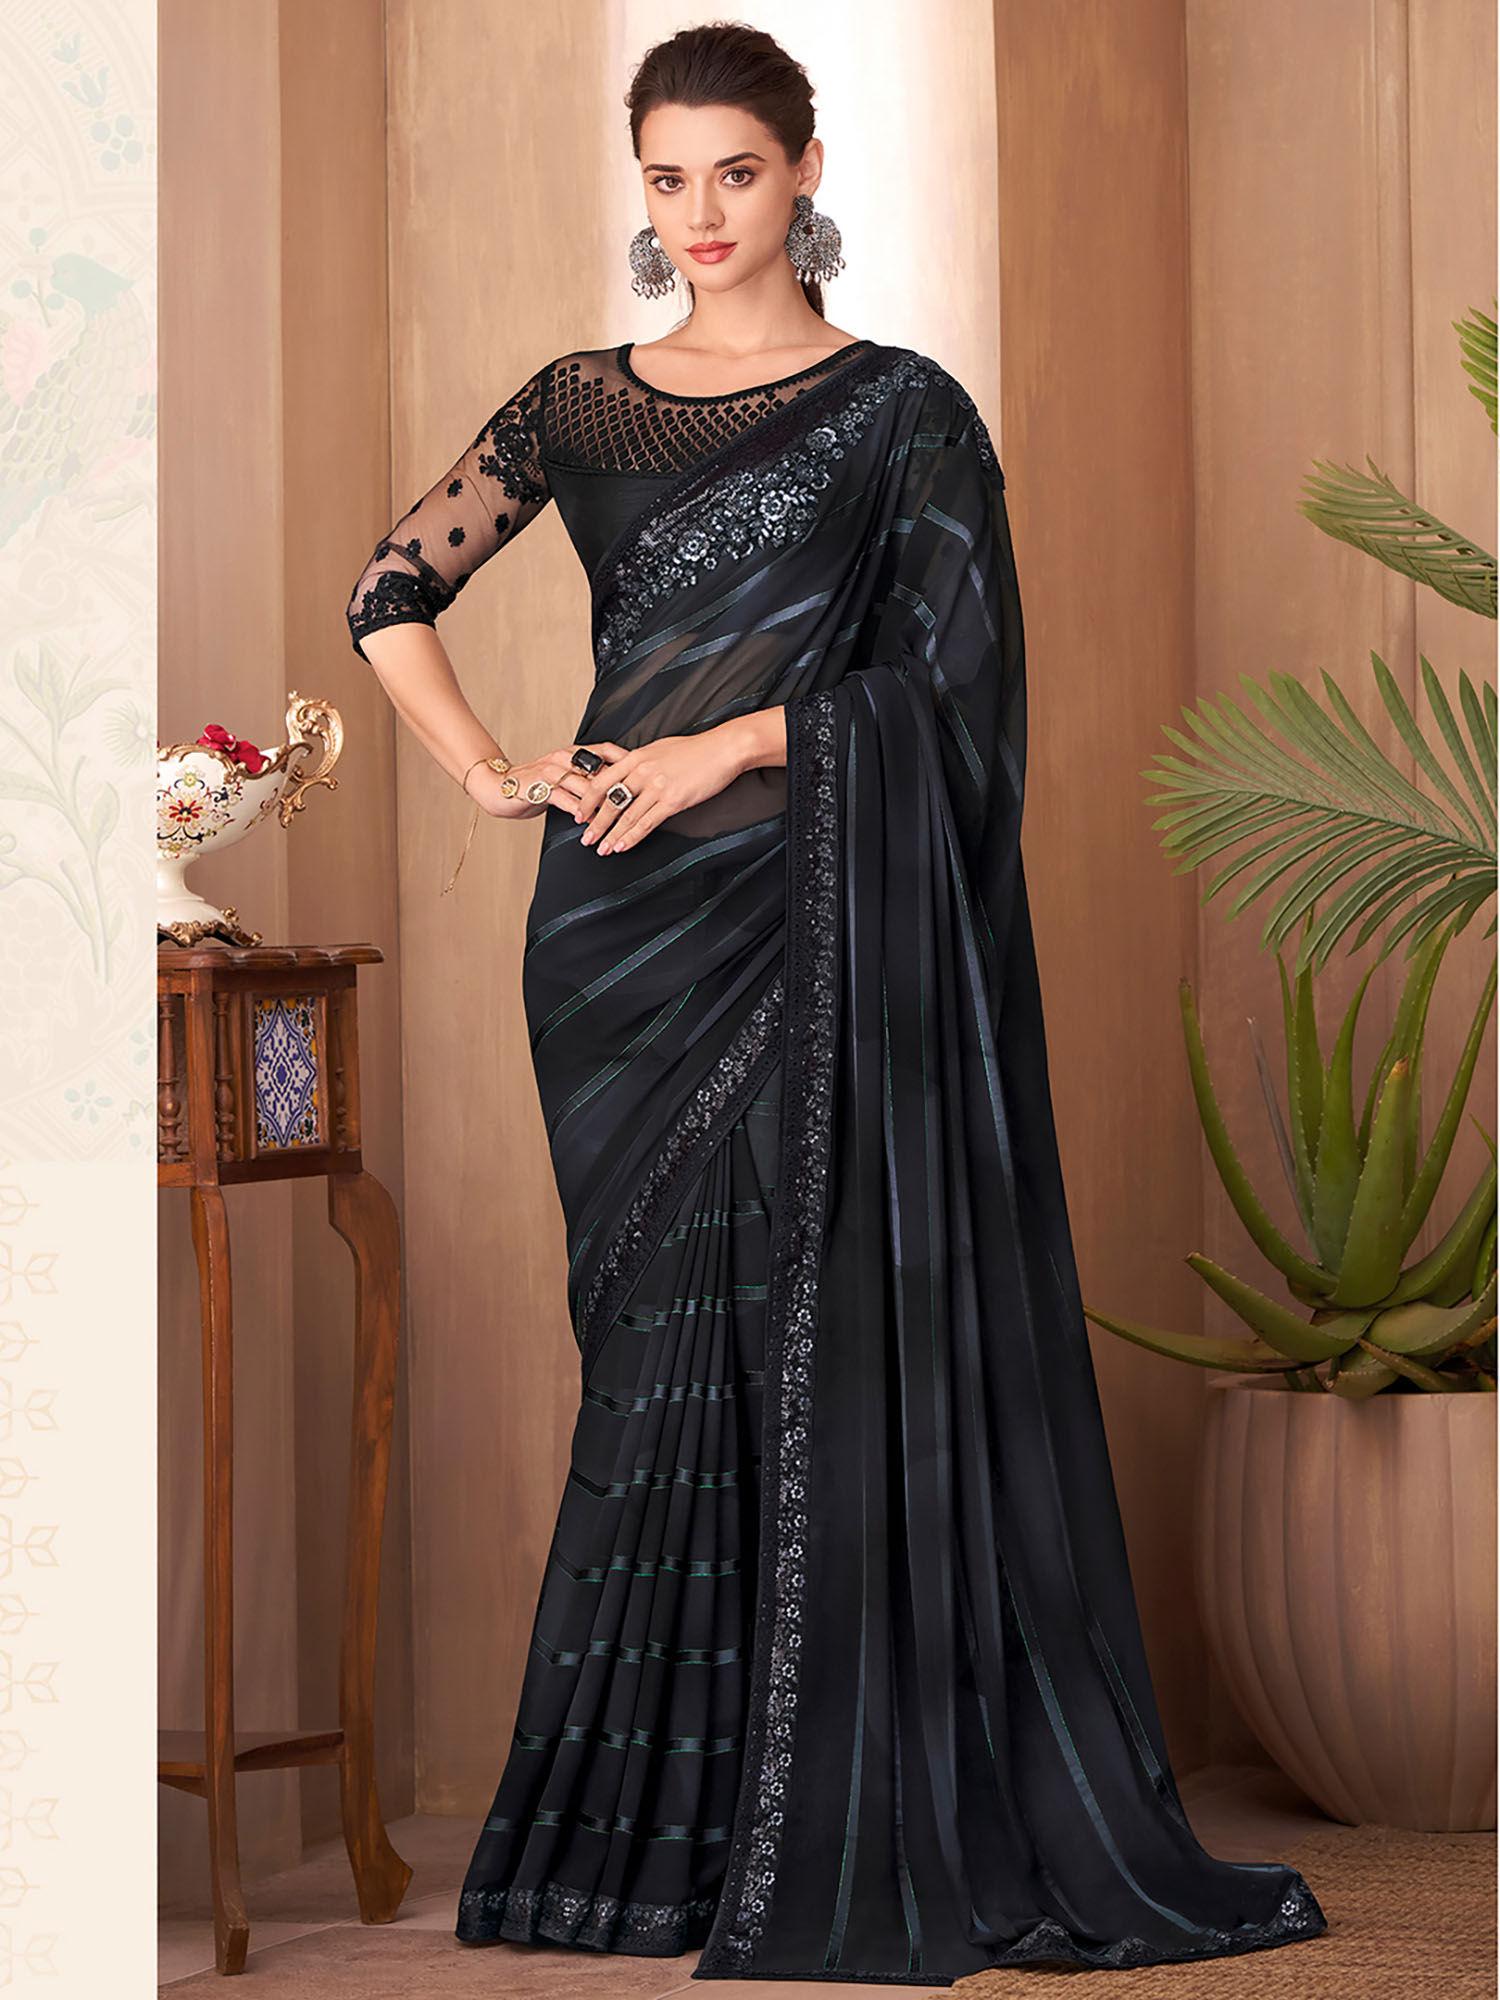 women's georgette black embellished designer saree with unstitched blouse